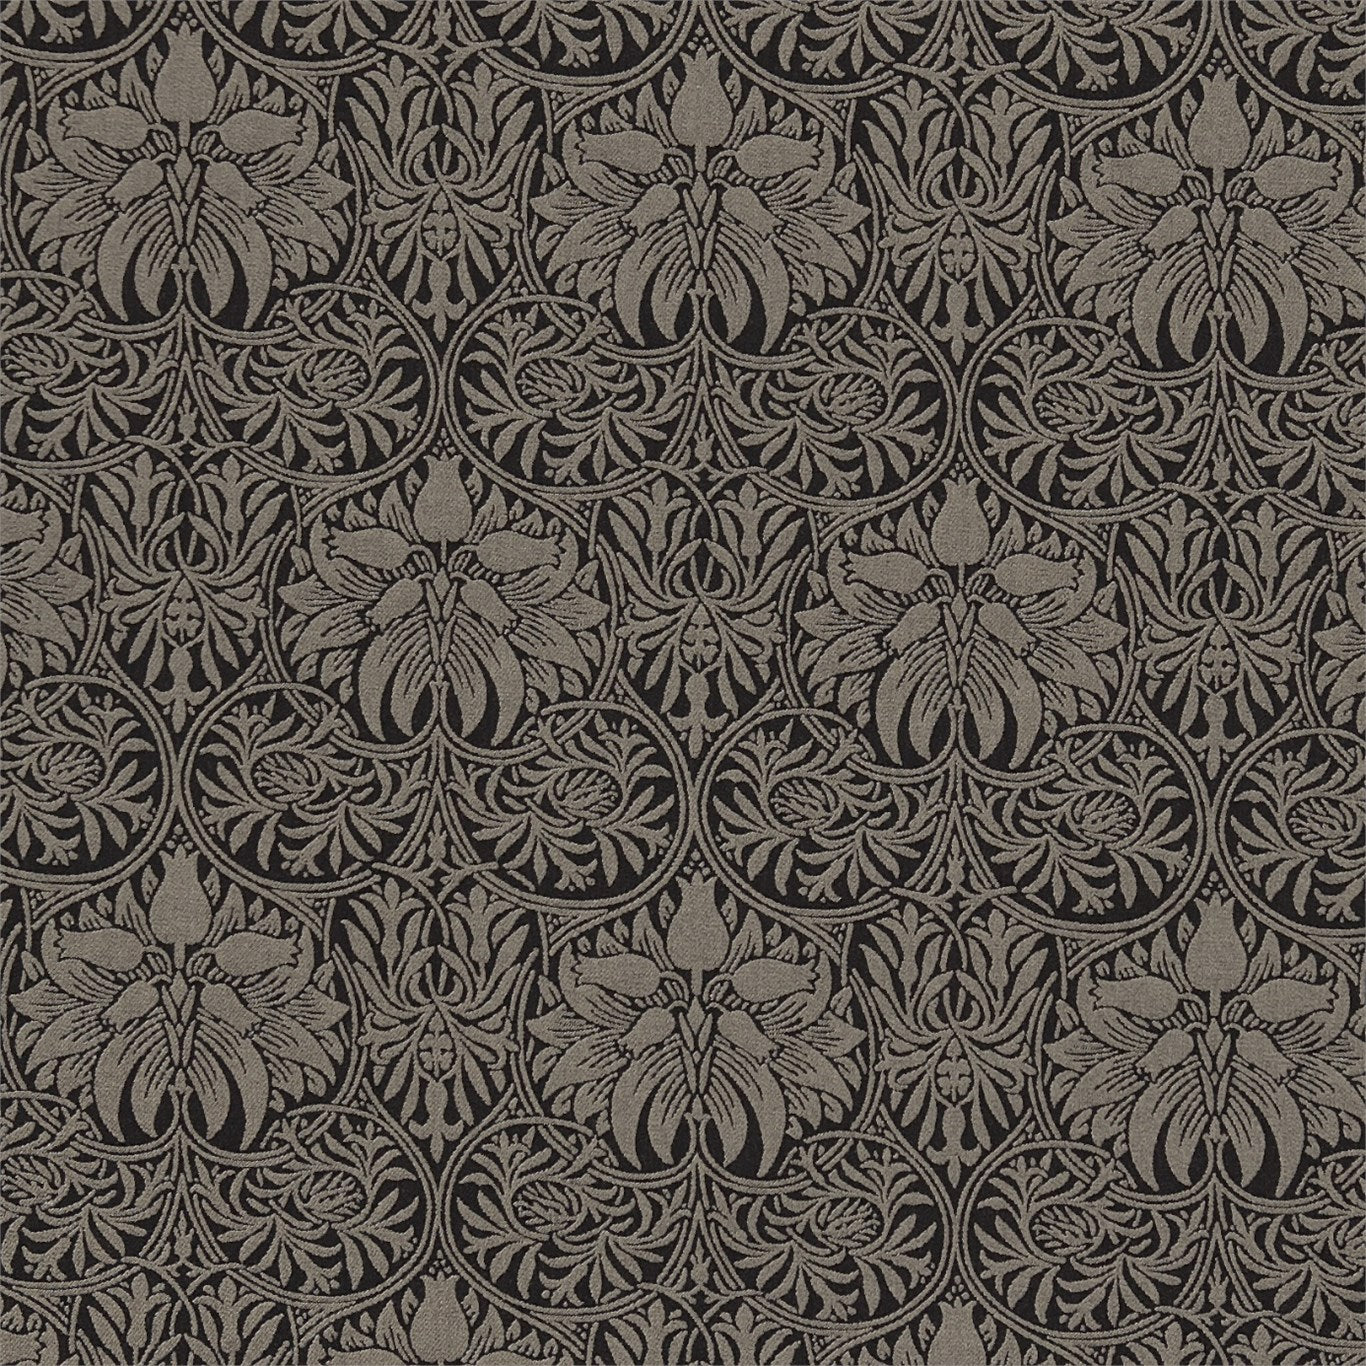 Crown Imperial Fabric by Morris & Co. - DM6W230292 - Black/Linen